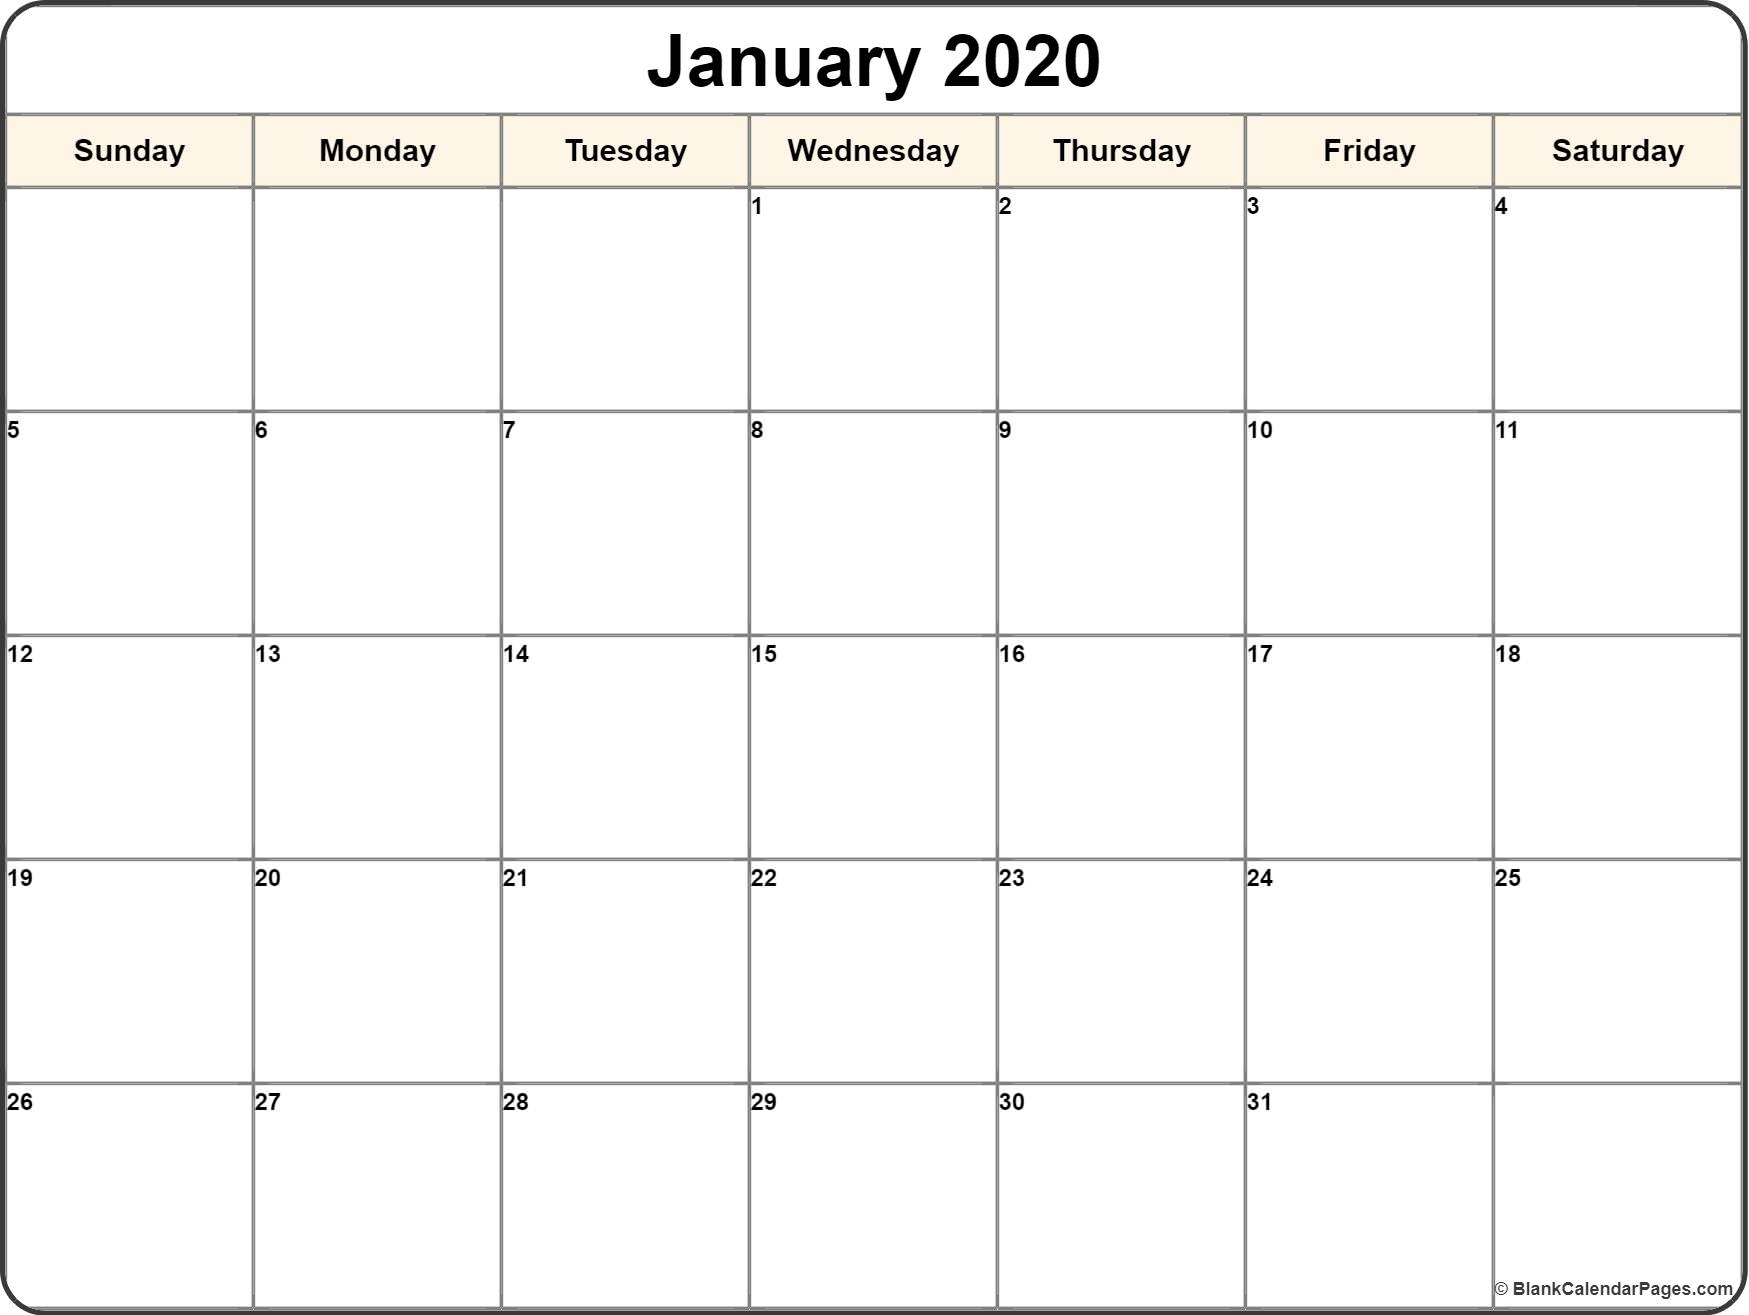 January 2020 Calendar | Free Printable Monthly Calendars throughout 2020 Printable Calender Imom